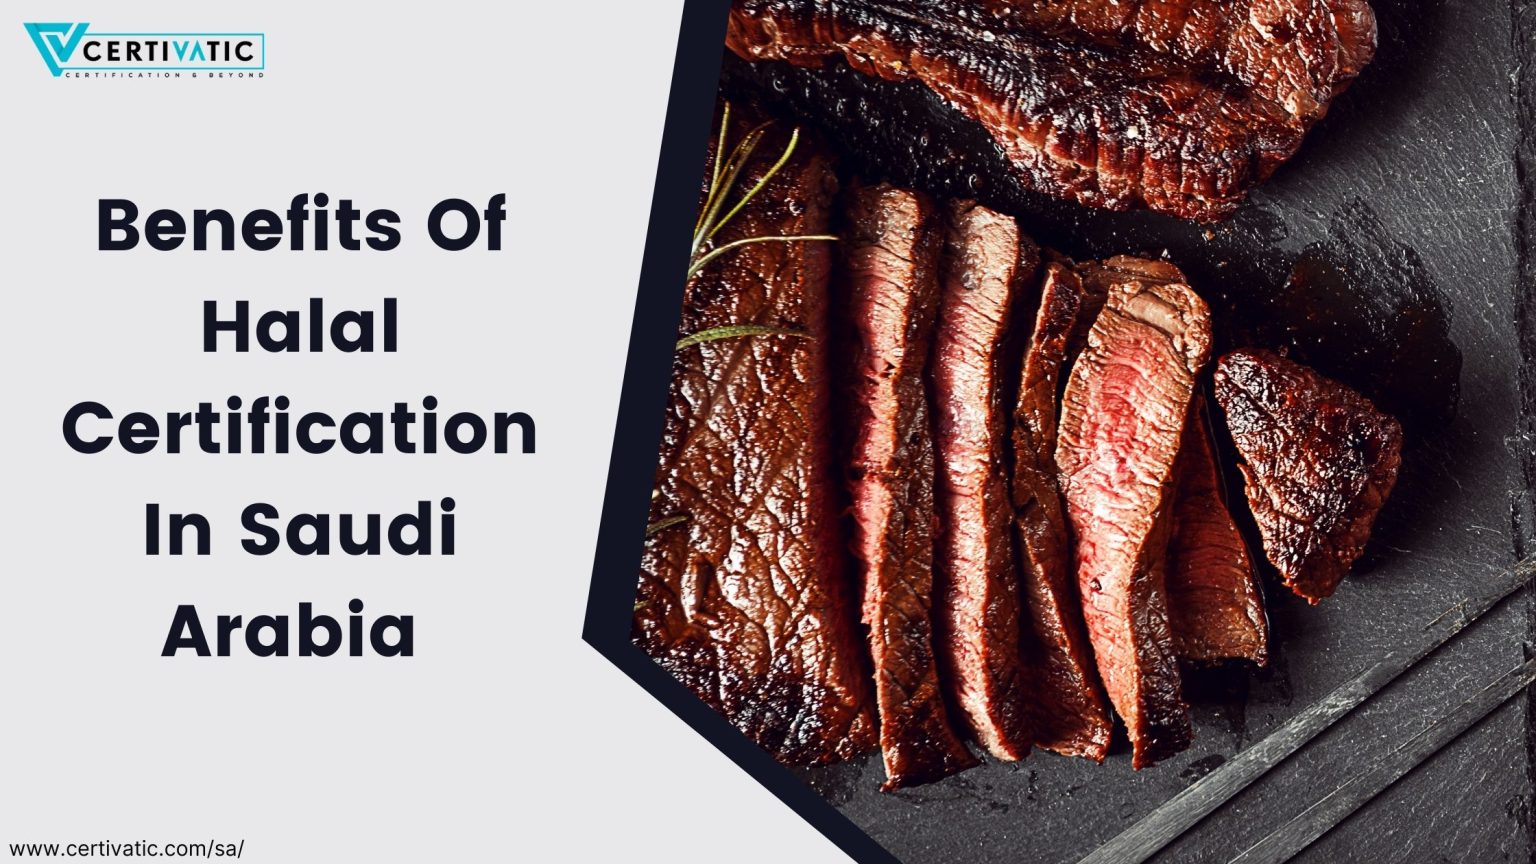 Benefits of Halal Certification in Saudi Arabia